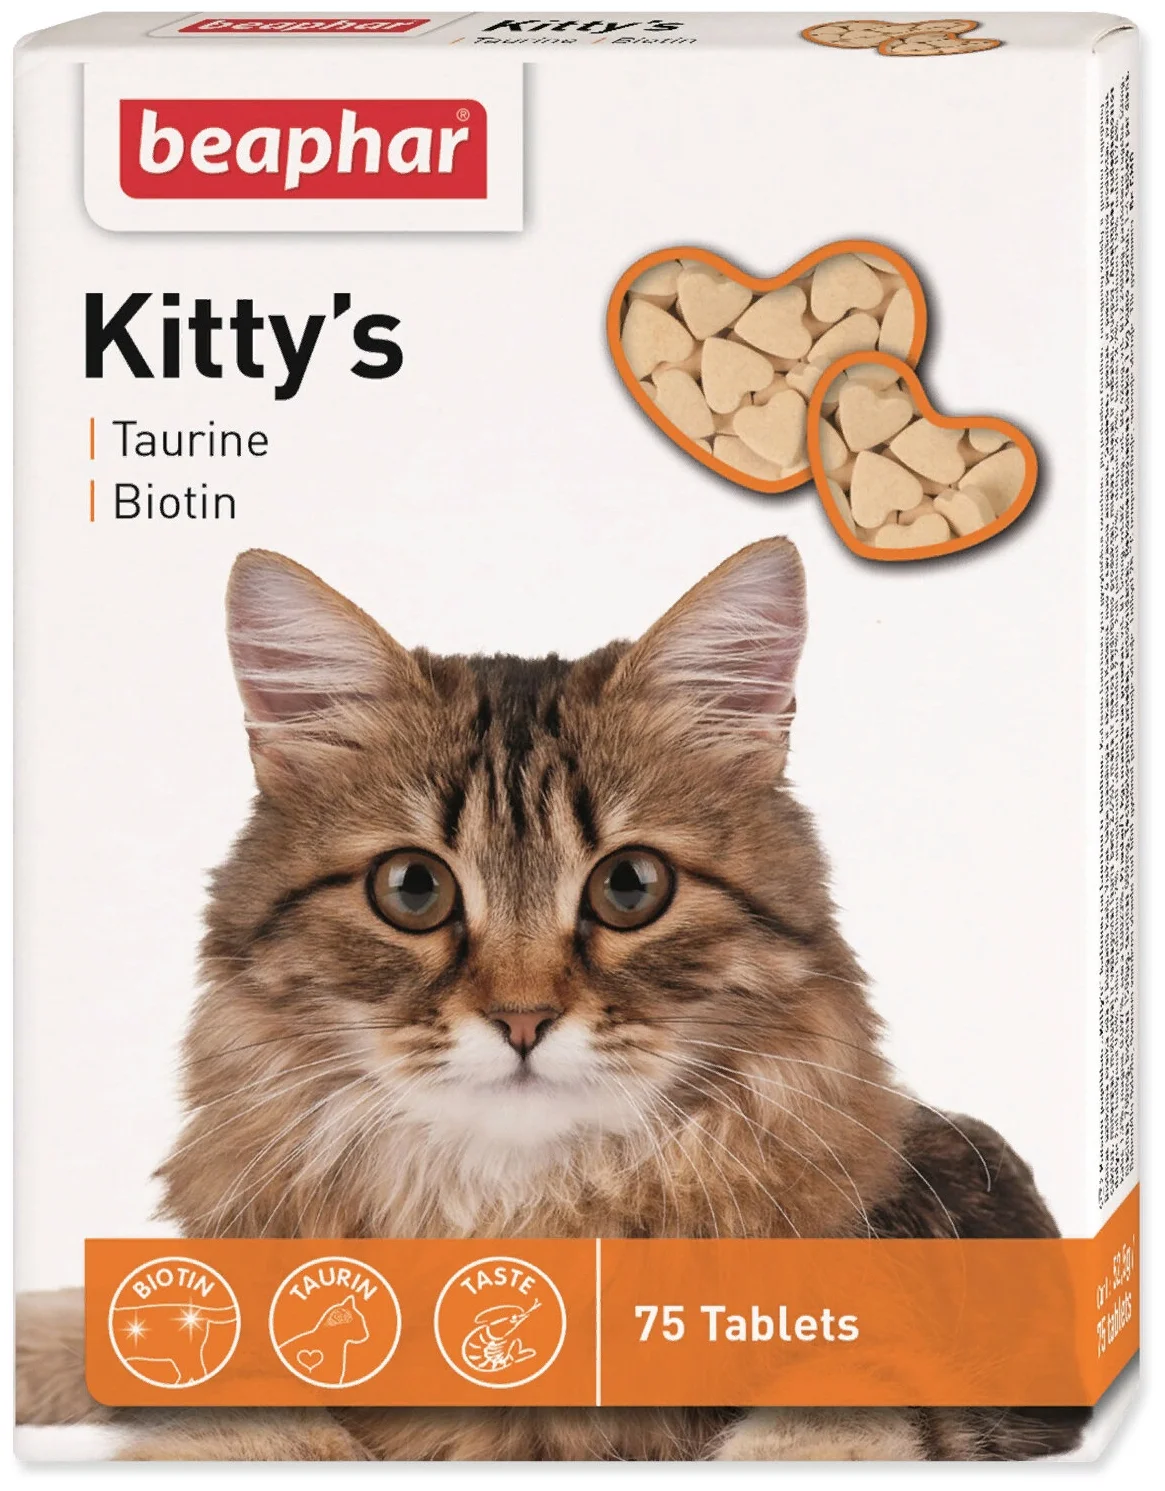 Beaphar Kitty's Taurine + Biotin - назначение: для обмена веществ